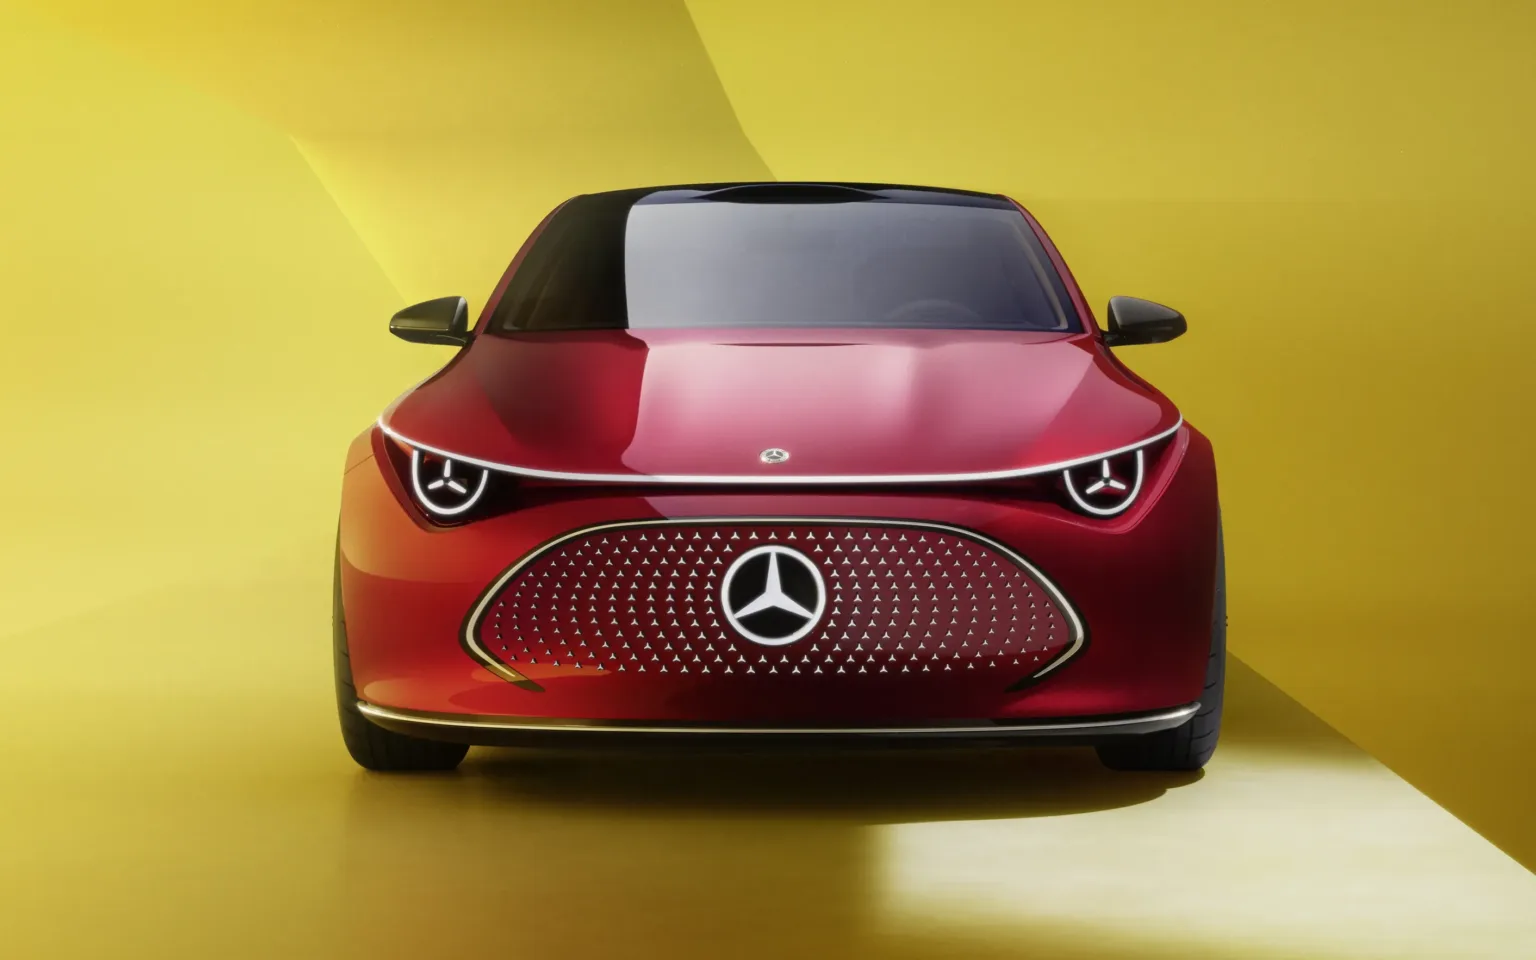 Mercedes-Benz Concept CLA Class Exterior Image 4